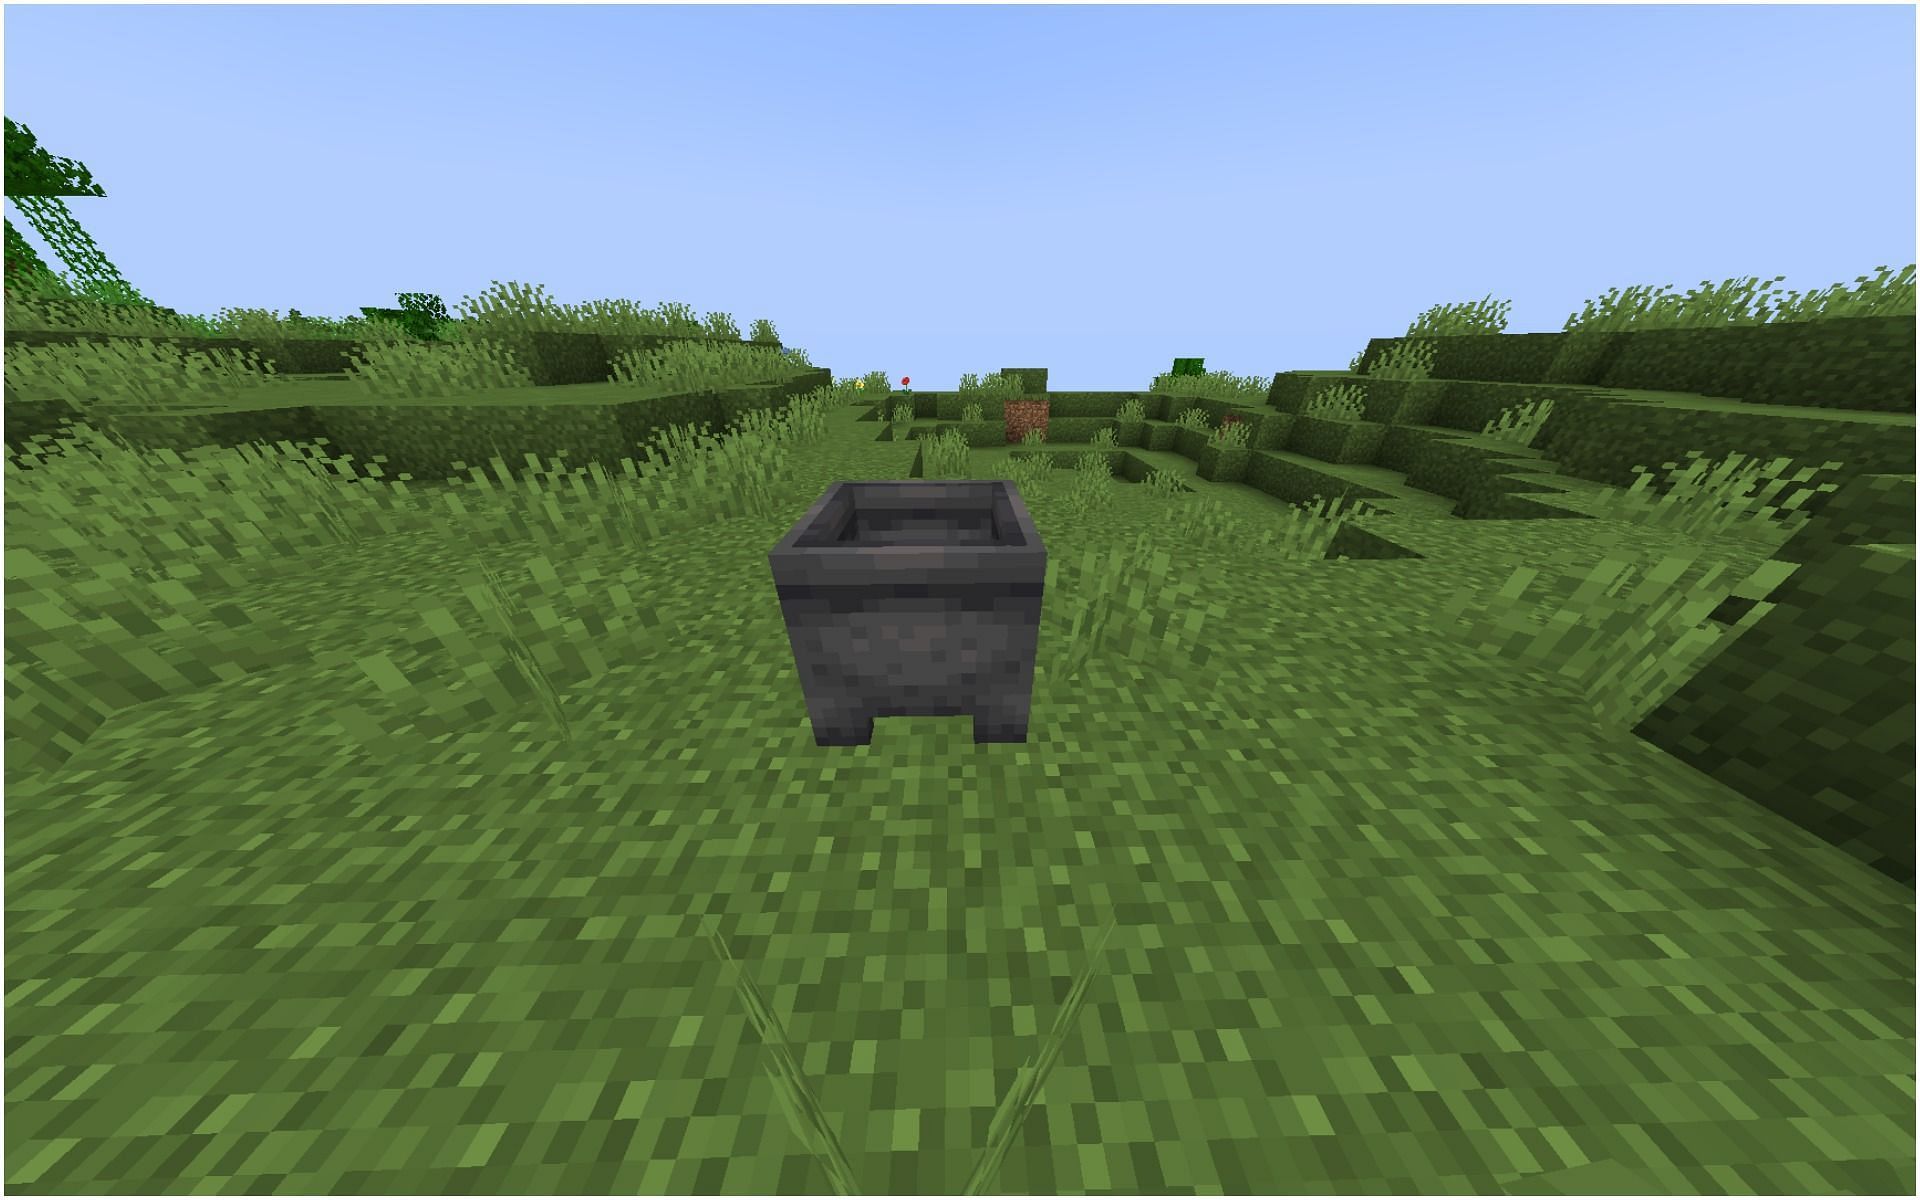 A cauldron in Minecraft (Image via Minecraft)